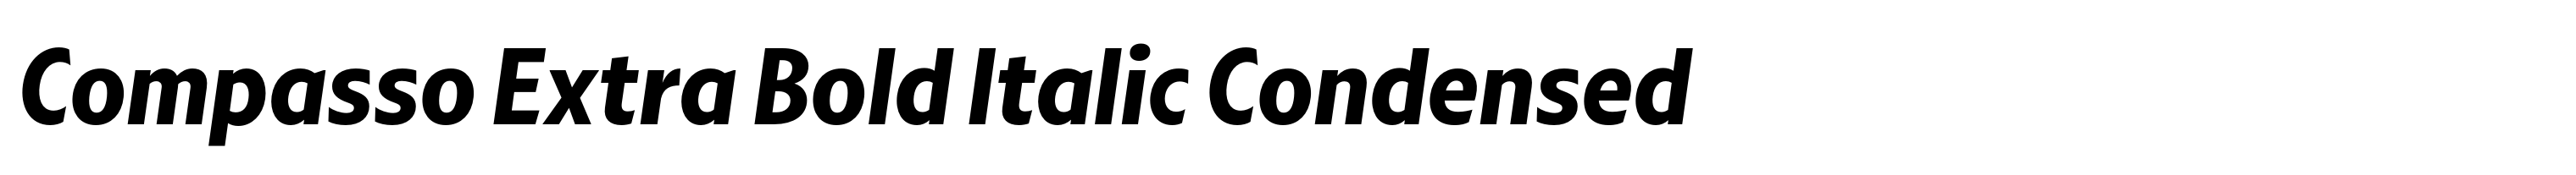 Compasso Extra Bold Italic Condensed